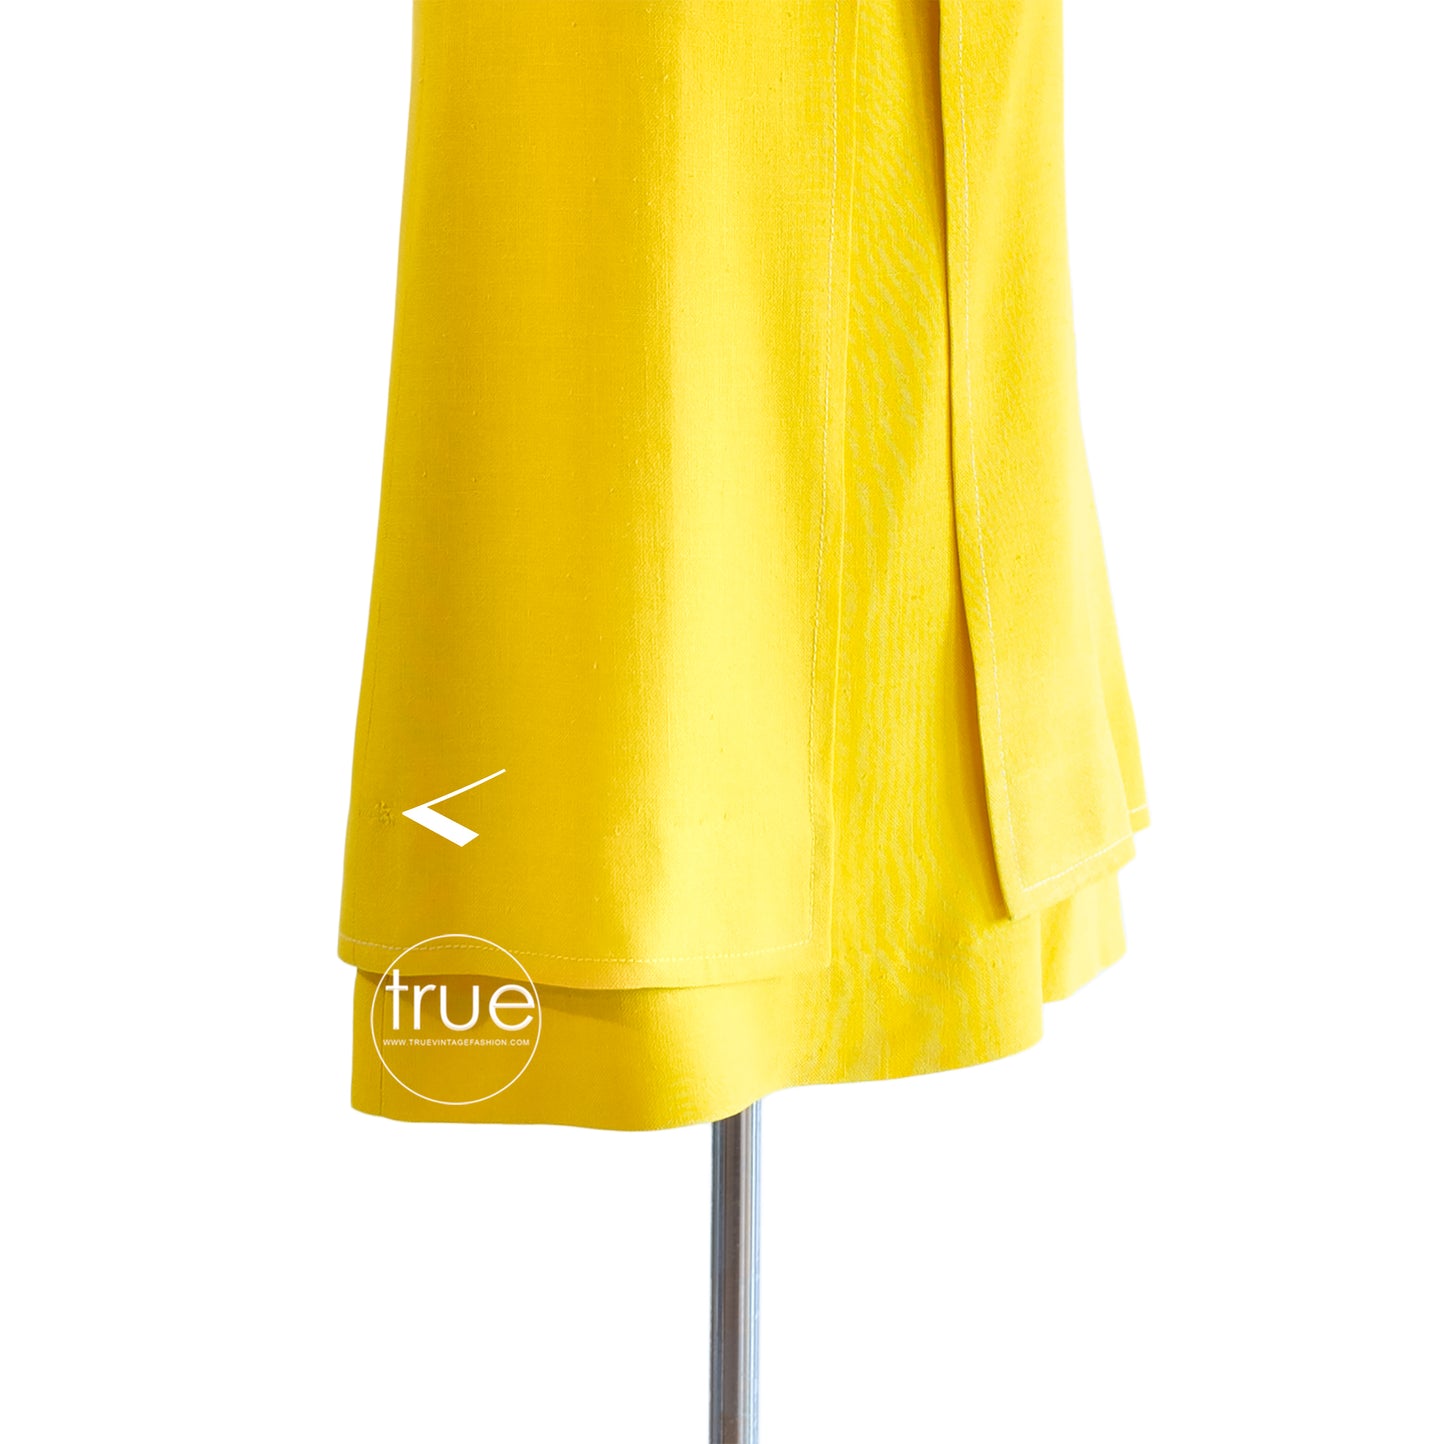 vintage 1960's mini dress ...super cute S.HOWARD HIRSH sunny yellow moygashel linen MOD mini